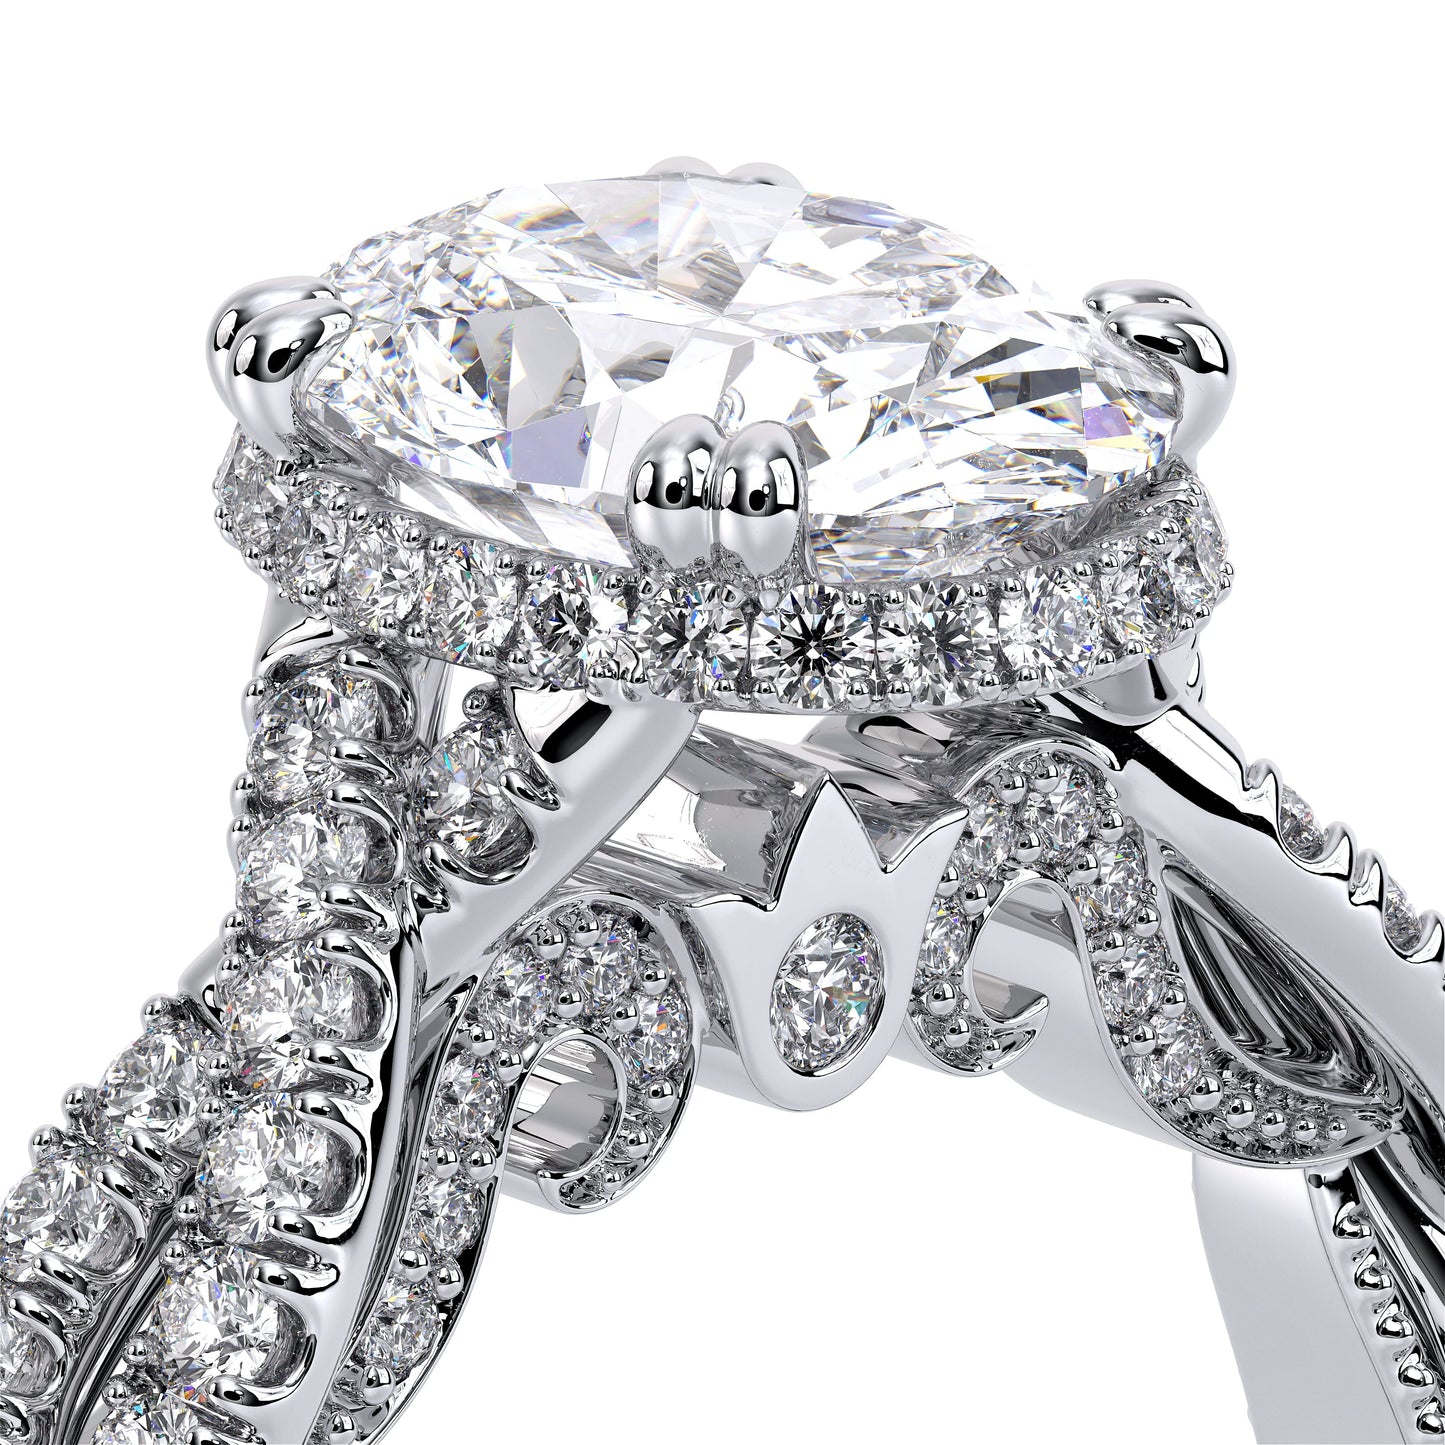 Verragio Insignia Collection Oval Semi-Mount Engagement Ring - Diamond Semi-Mount Rings